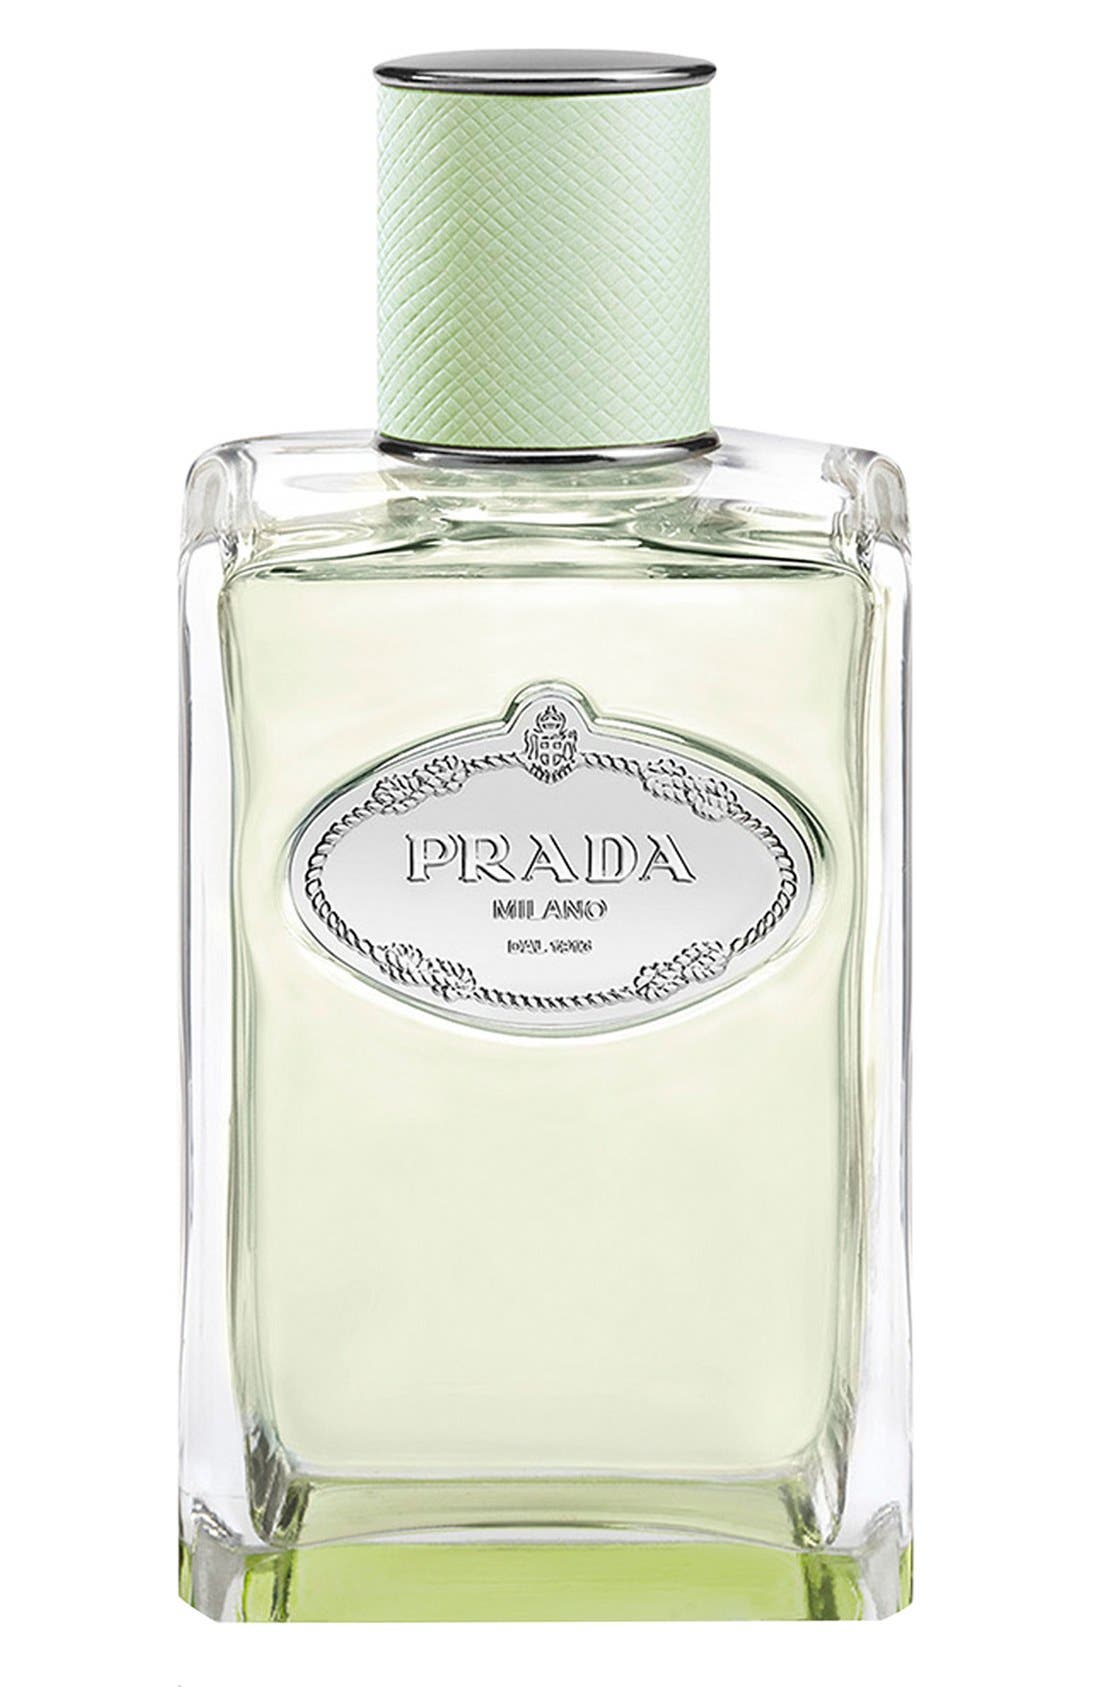 prada latest perfume